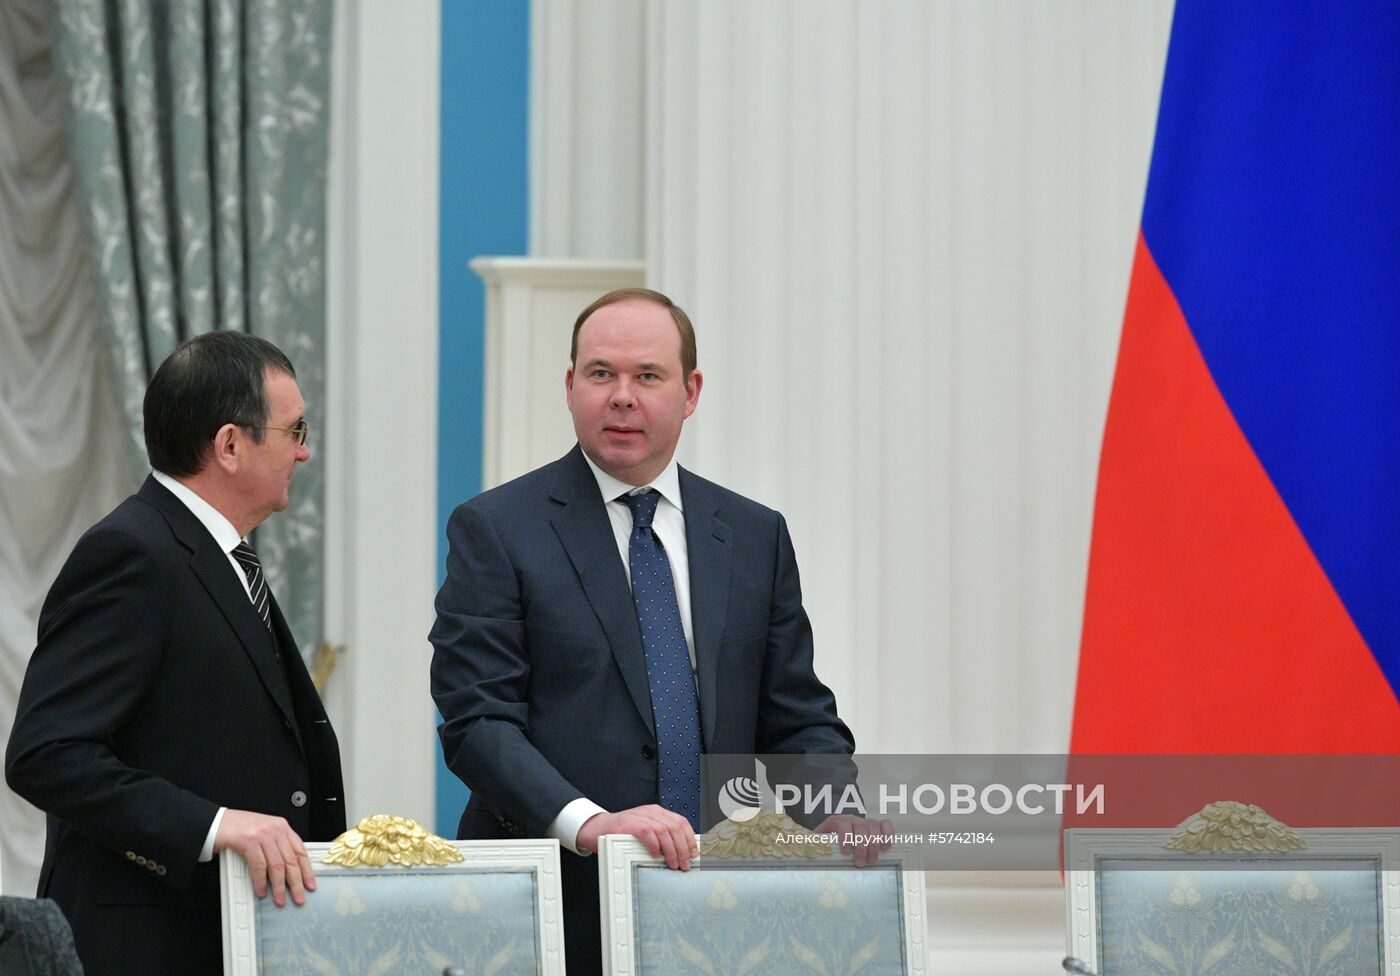 Президент РФ В. Путин встретился с руководством обеих палат парламента